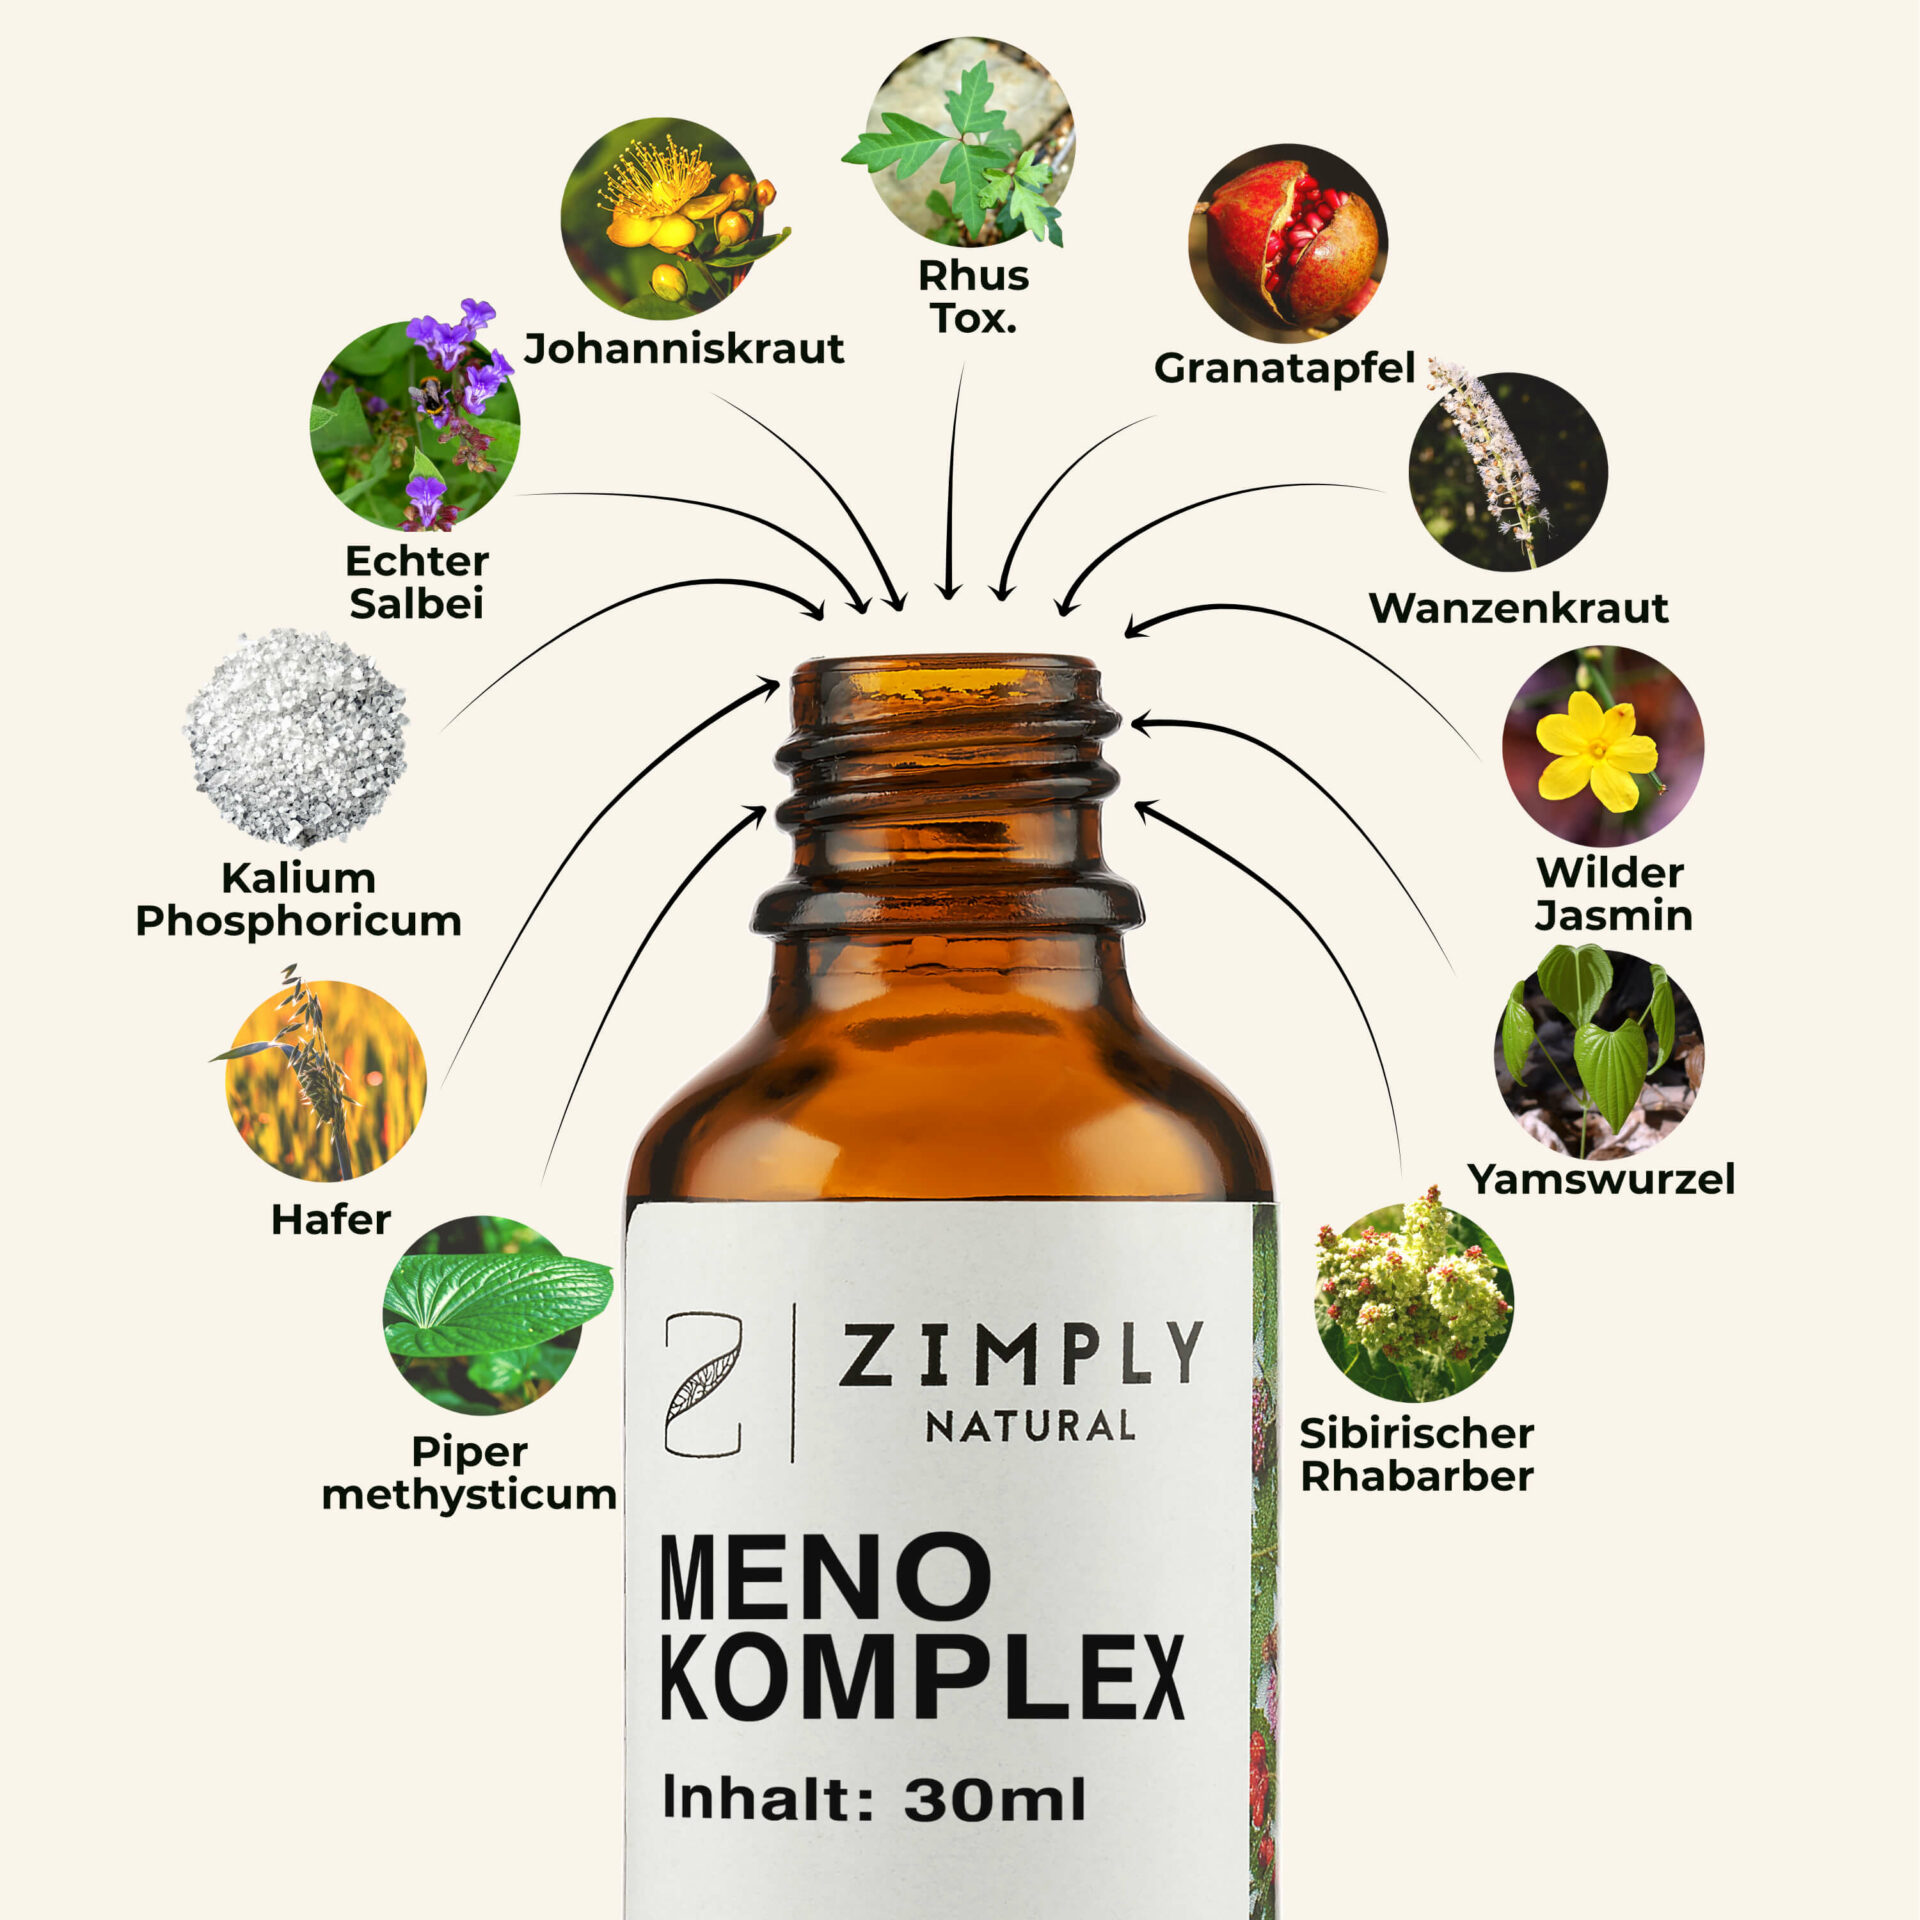 Zimply Natural Meno Komplex Mischung